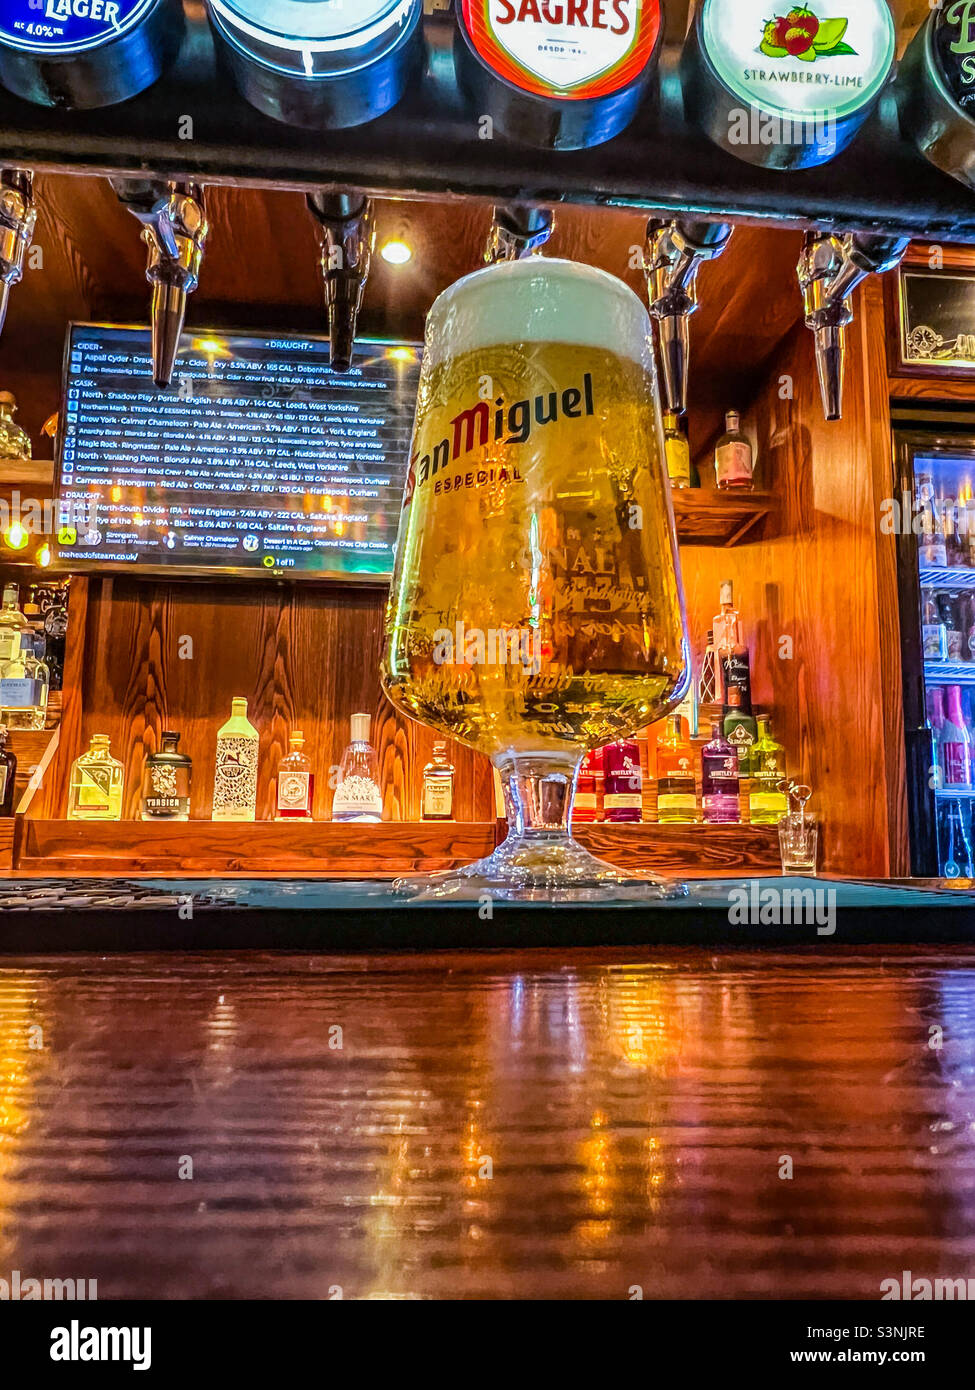 Rinfrescante pinta di San Miguel lager in un bar Foto Stock